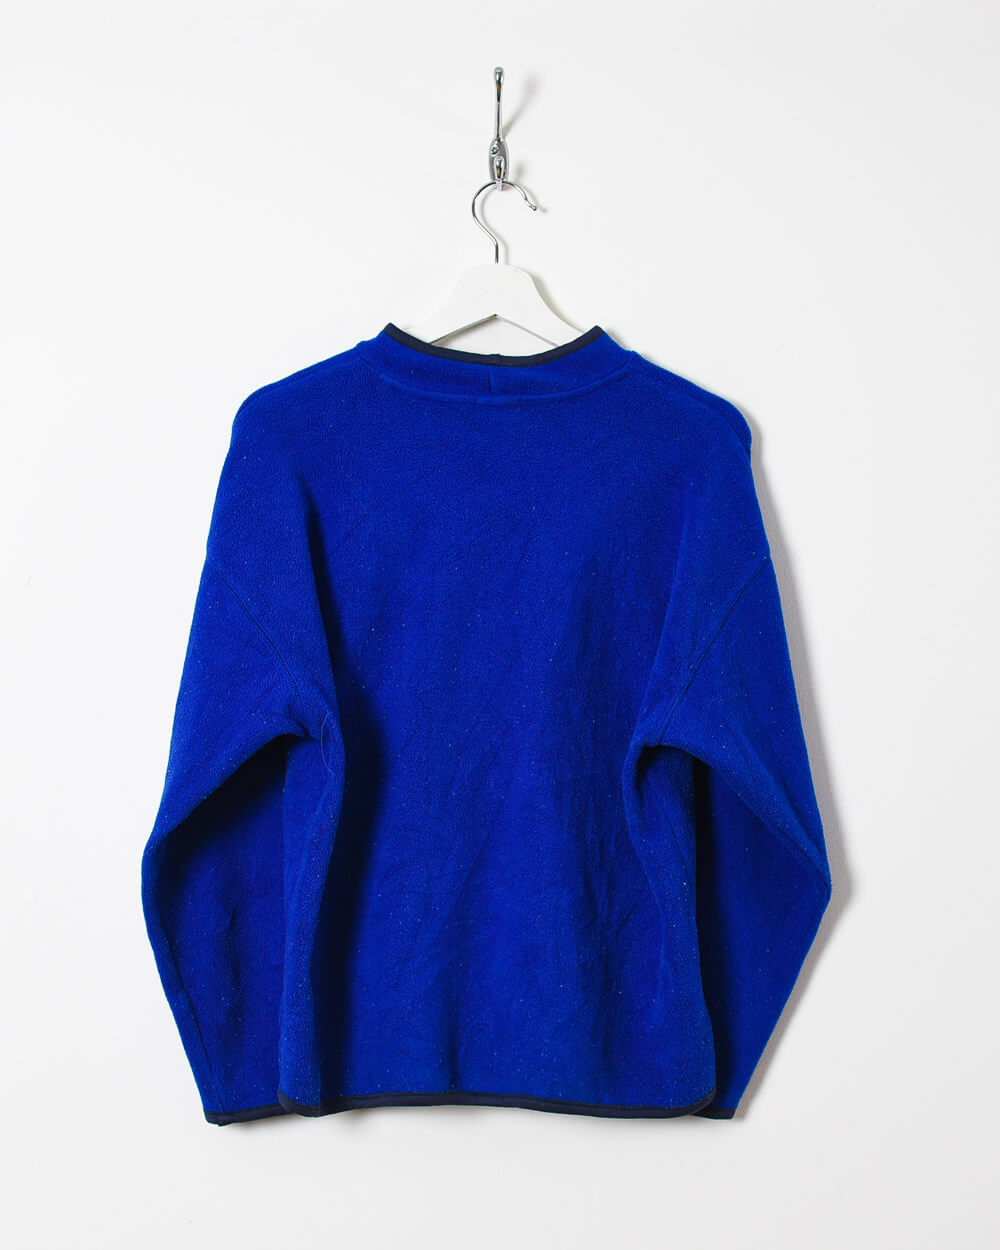 Blue Nike Pullover Fleece - Small